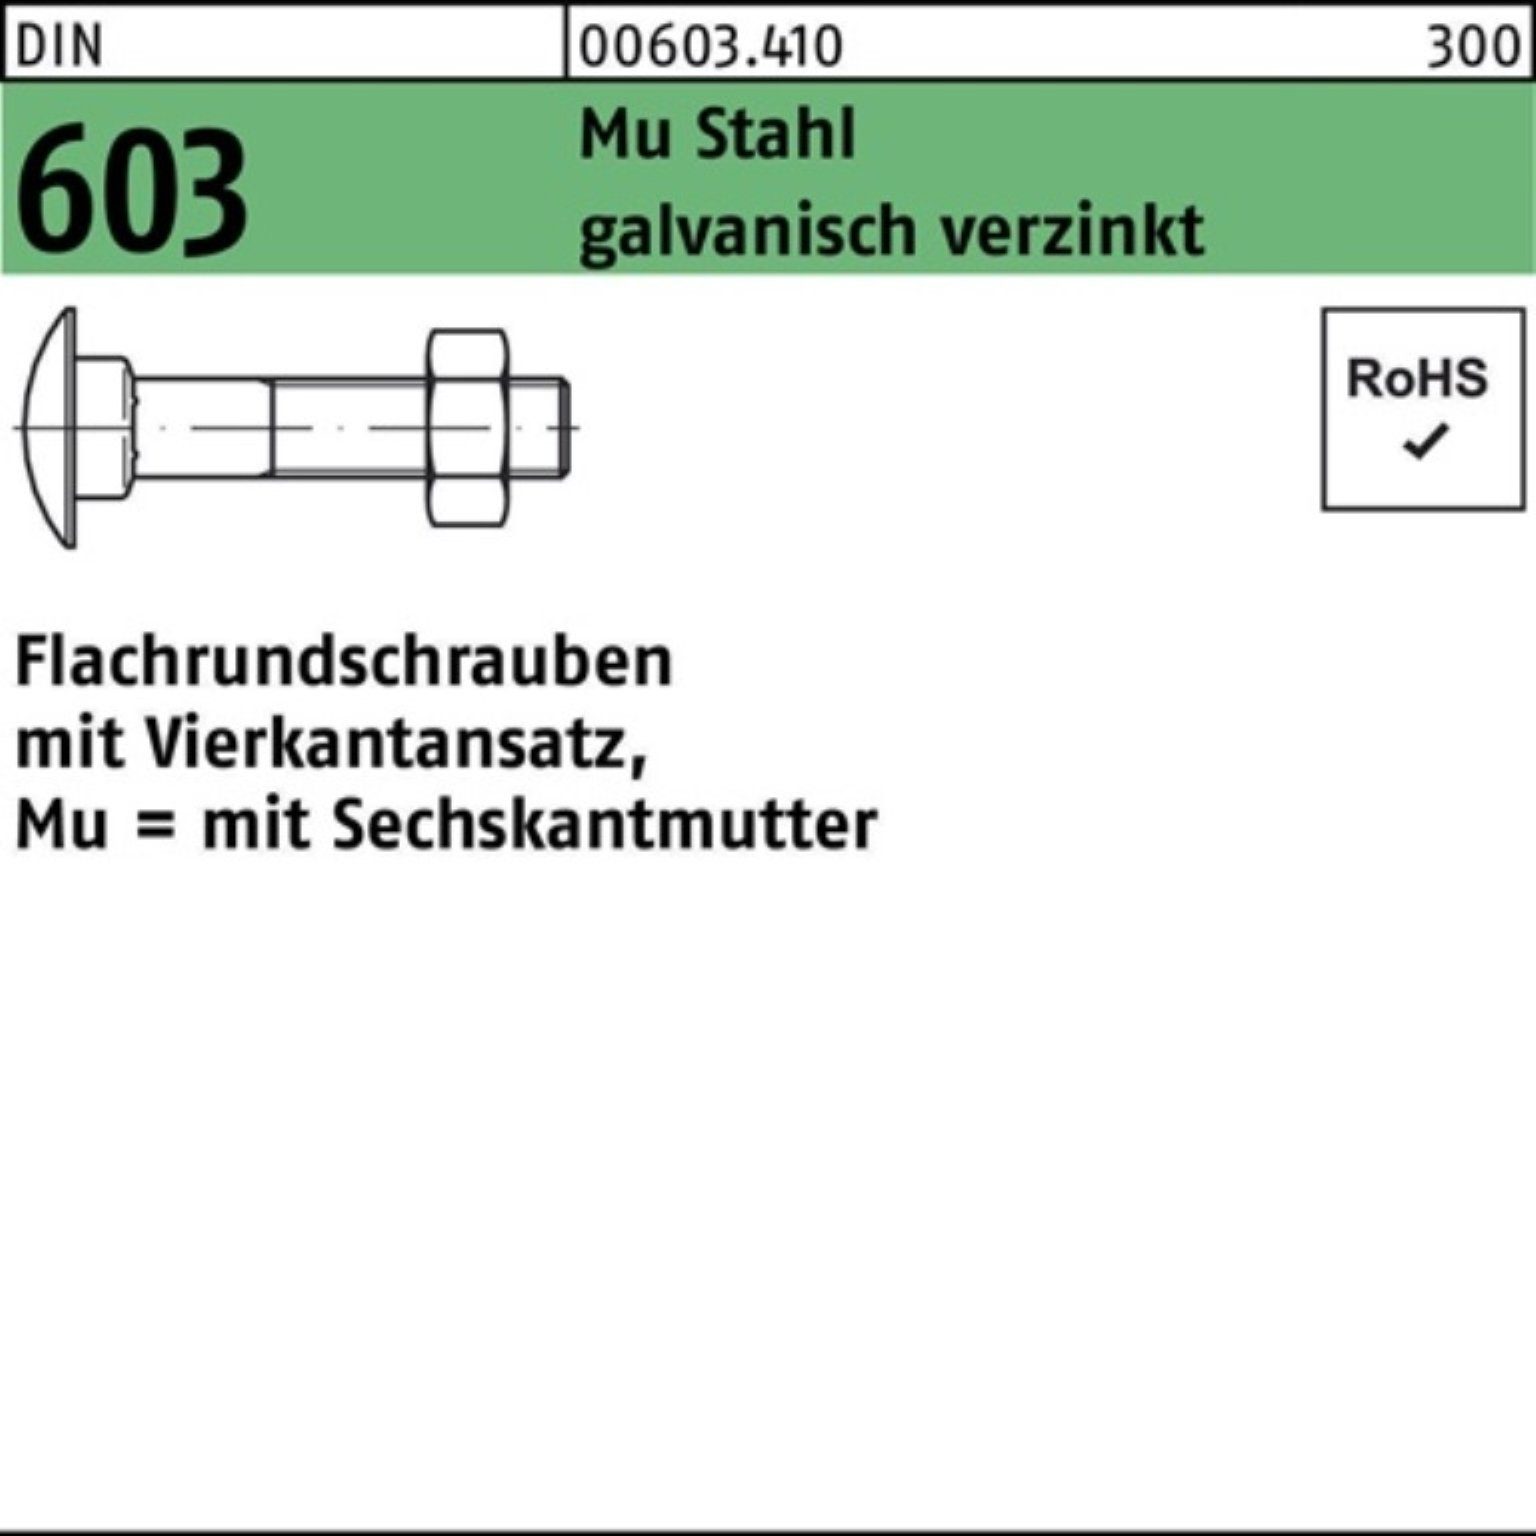 DIN Vierkantansatz/6-ktmutter Reyher M Flachrundschraube 603 200er Schraube Pack M6x70